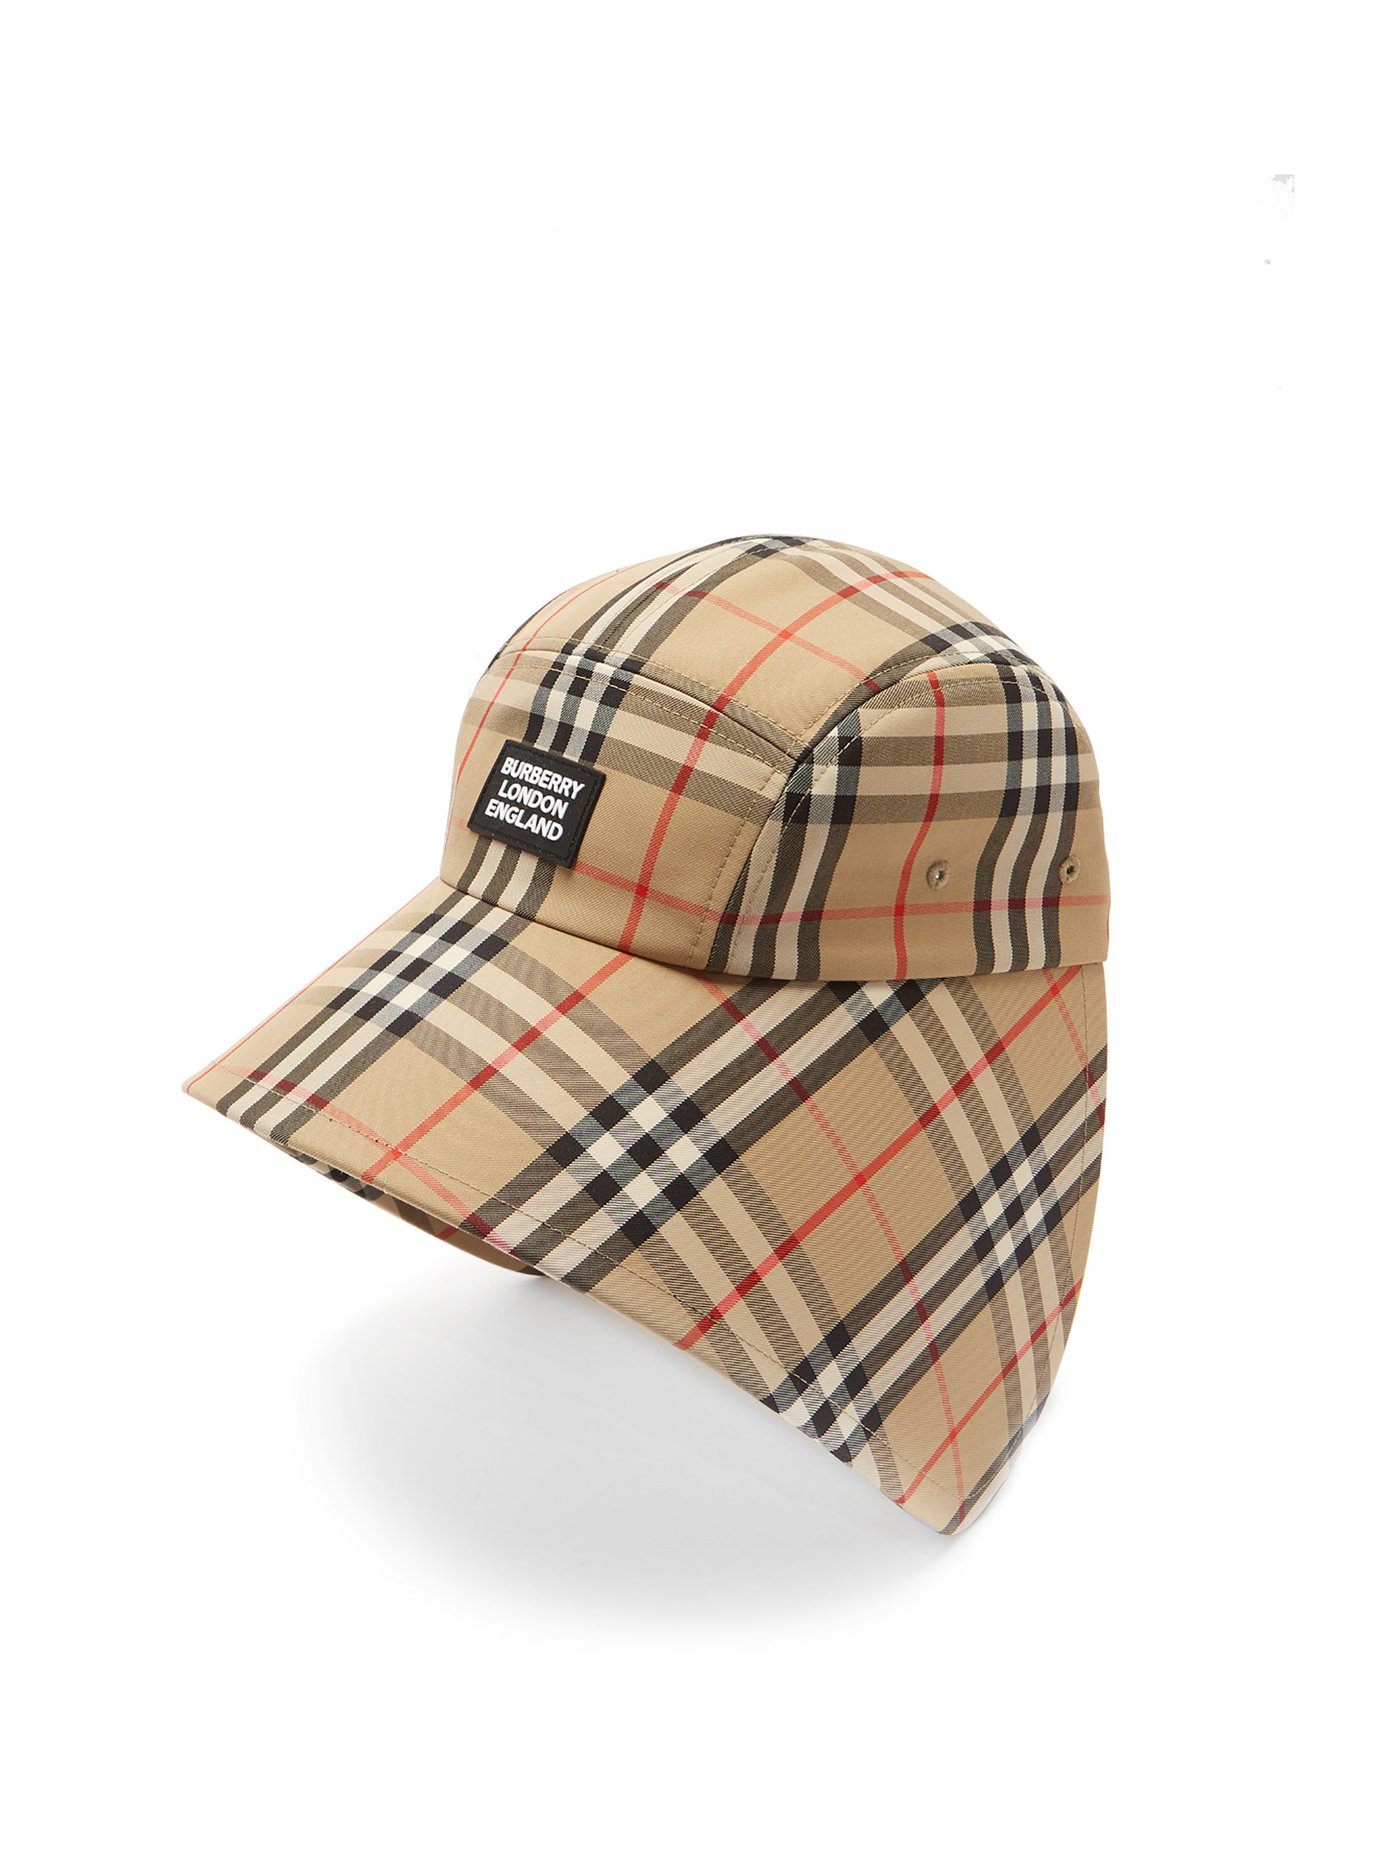 burberry vintage check hat